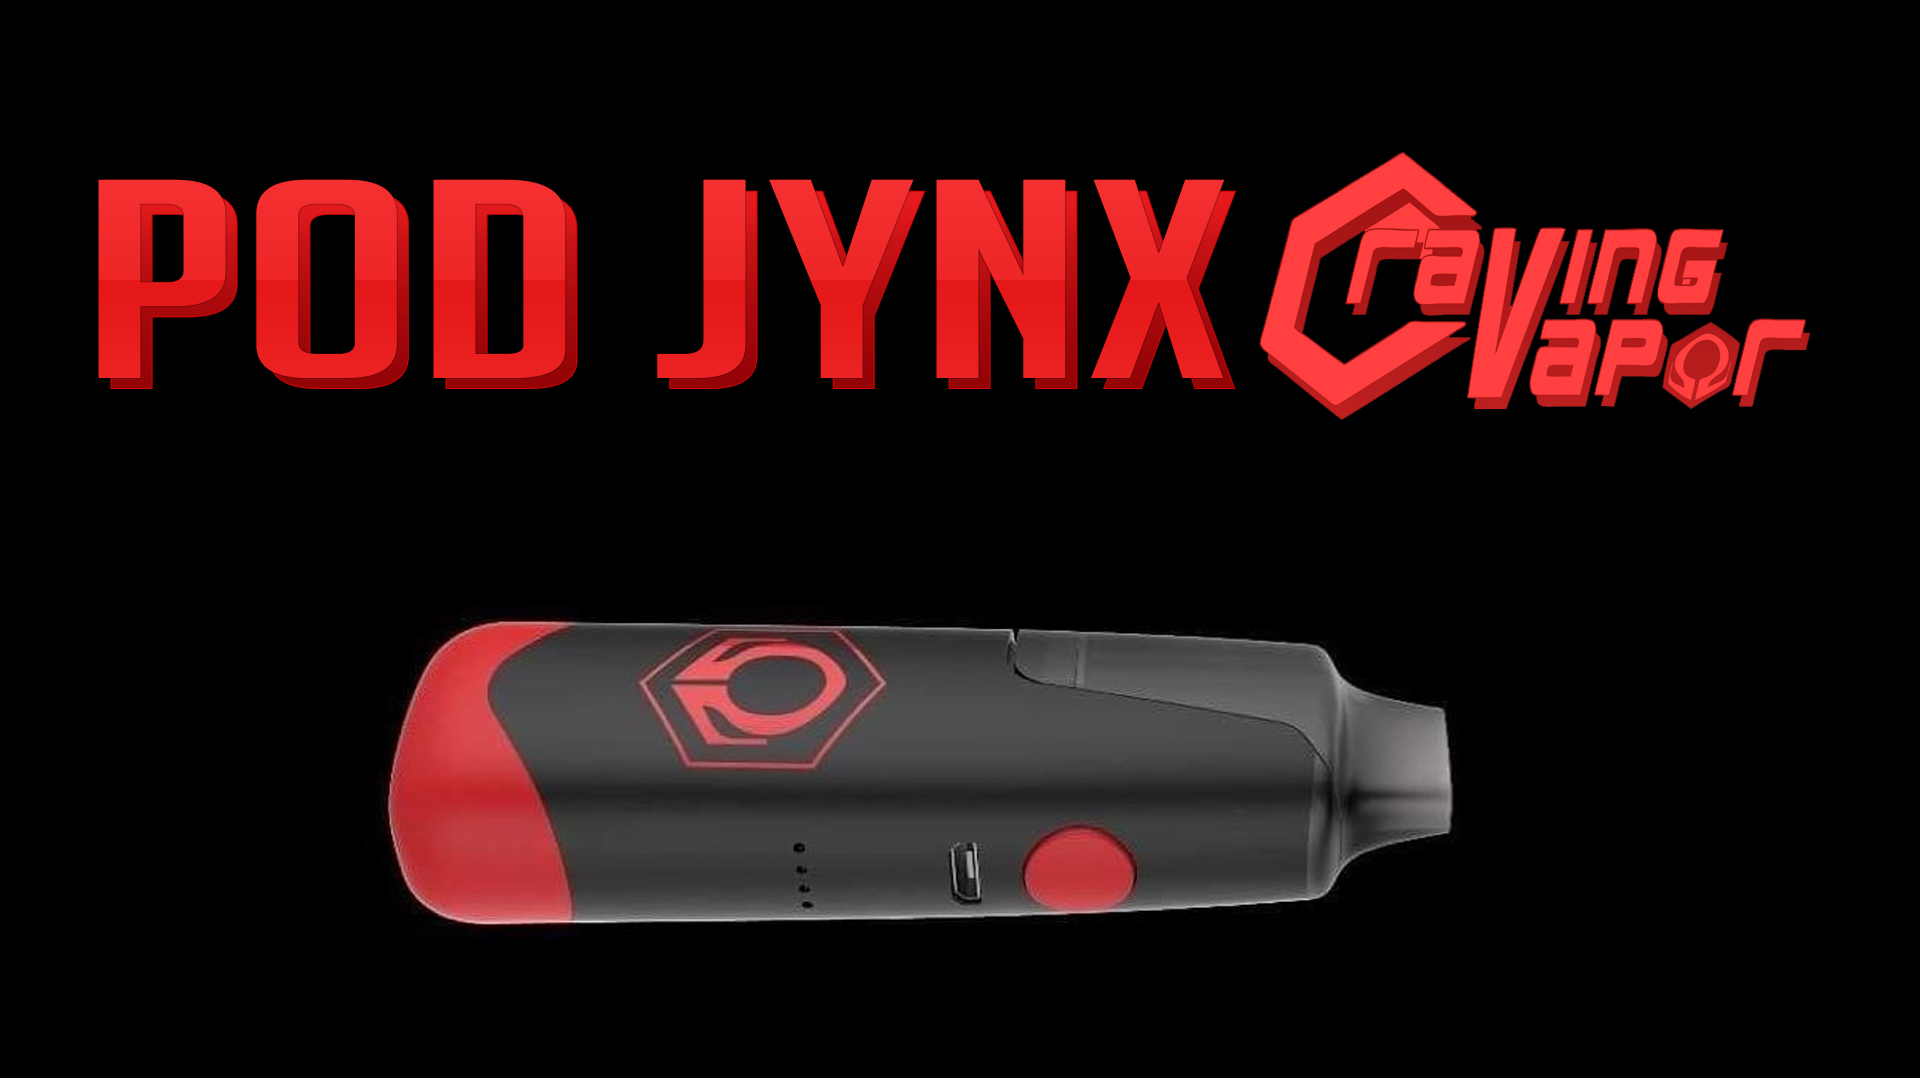 craving vapor jynx